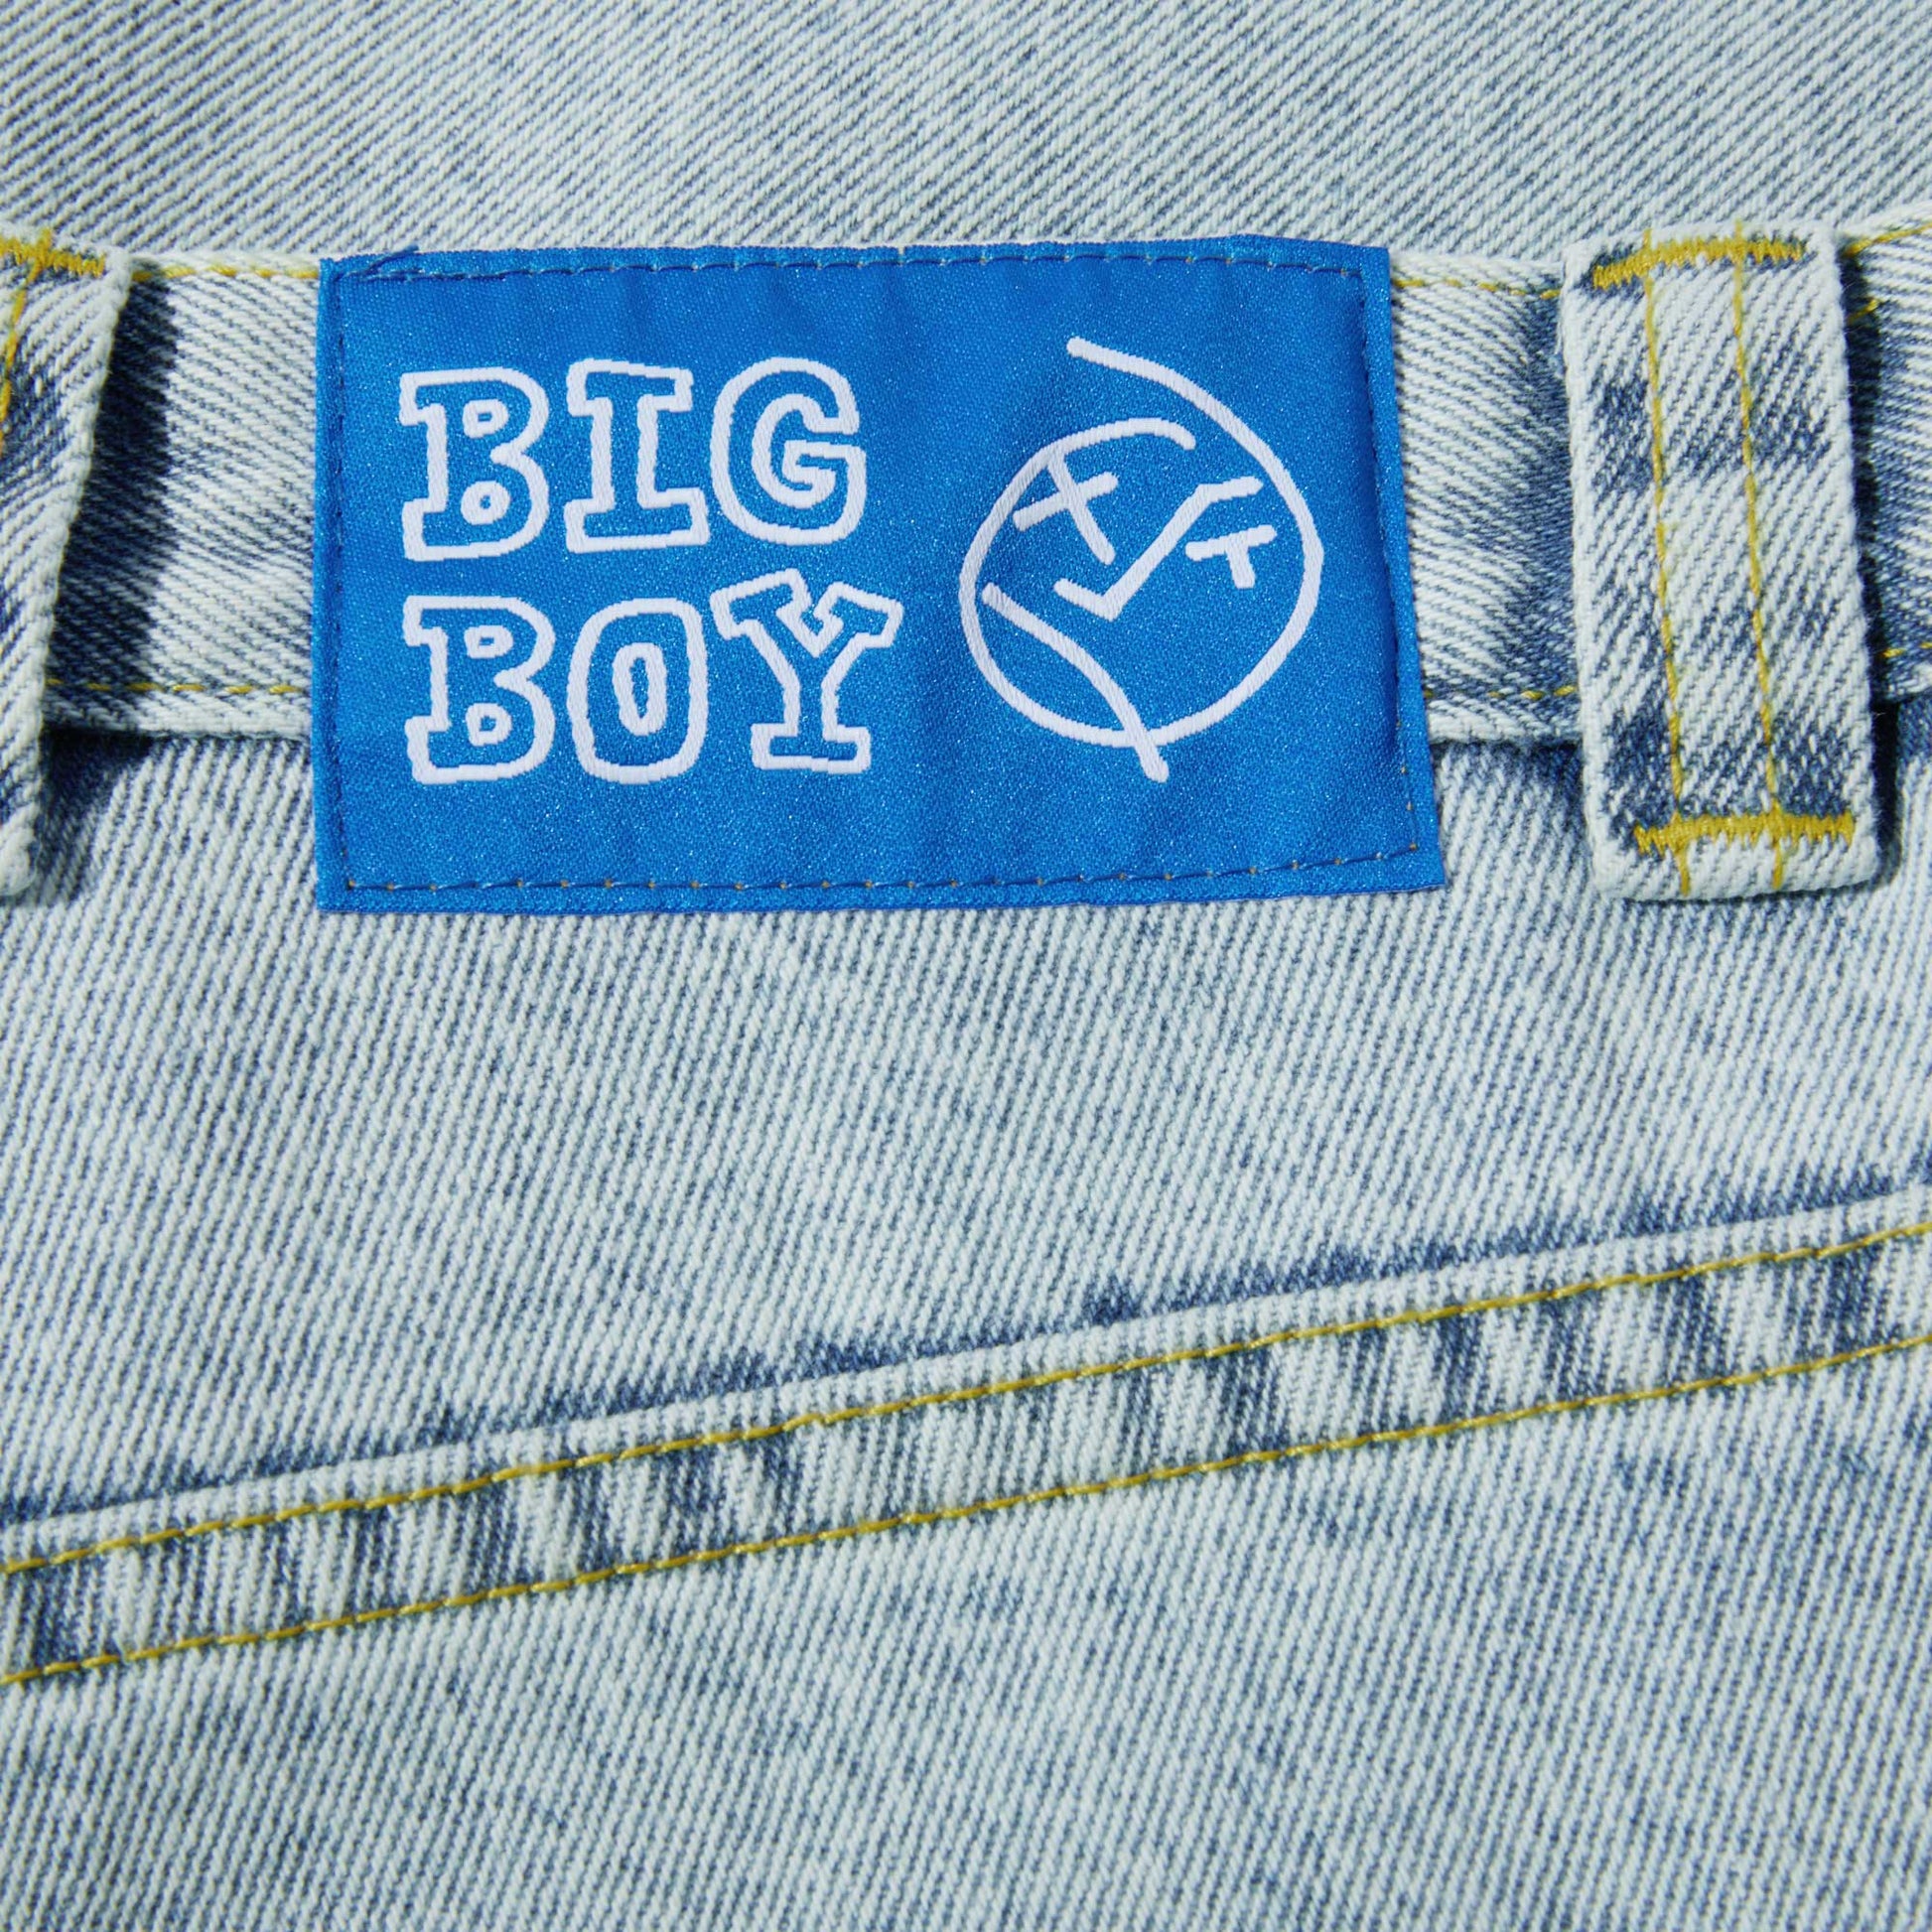 Polar Big Boy Jeans, light blue - Tiki Room Skateboards - 3